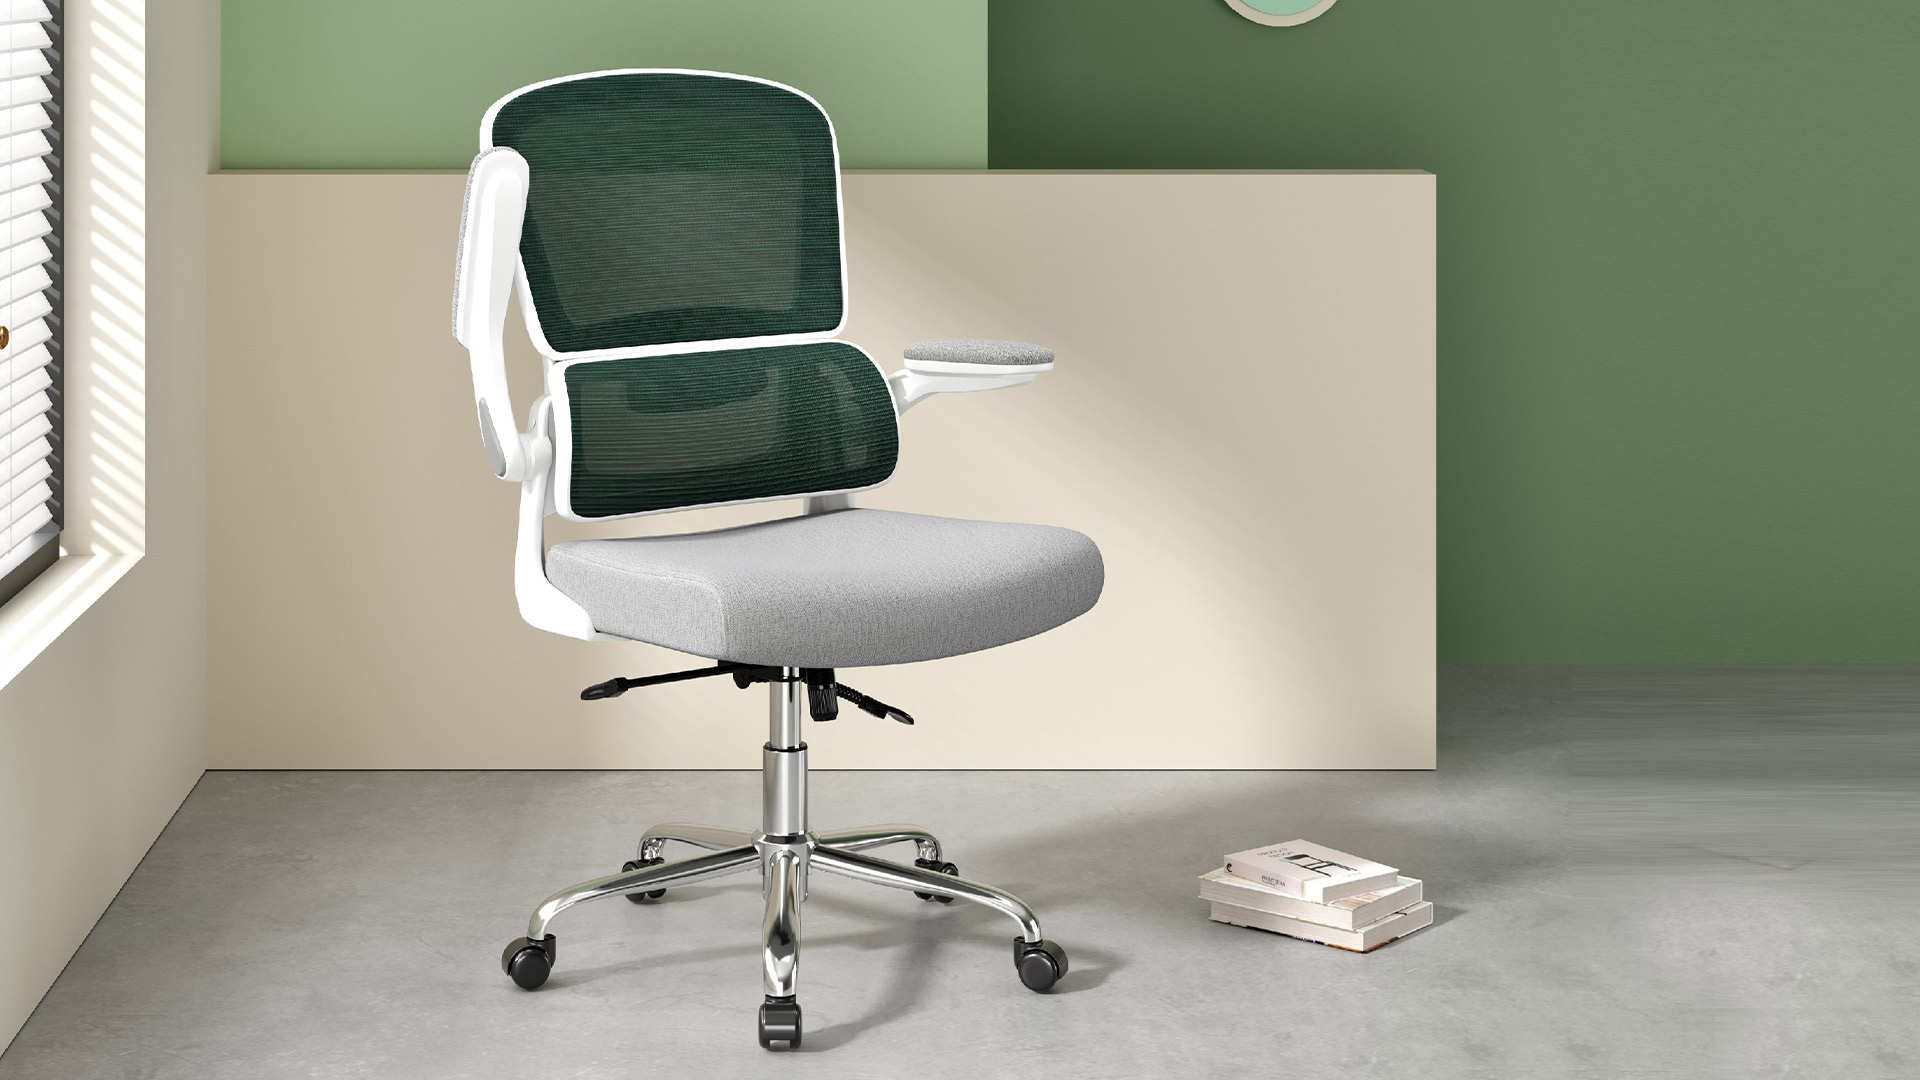 Logicfox Ergonomic Office Chair